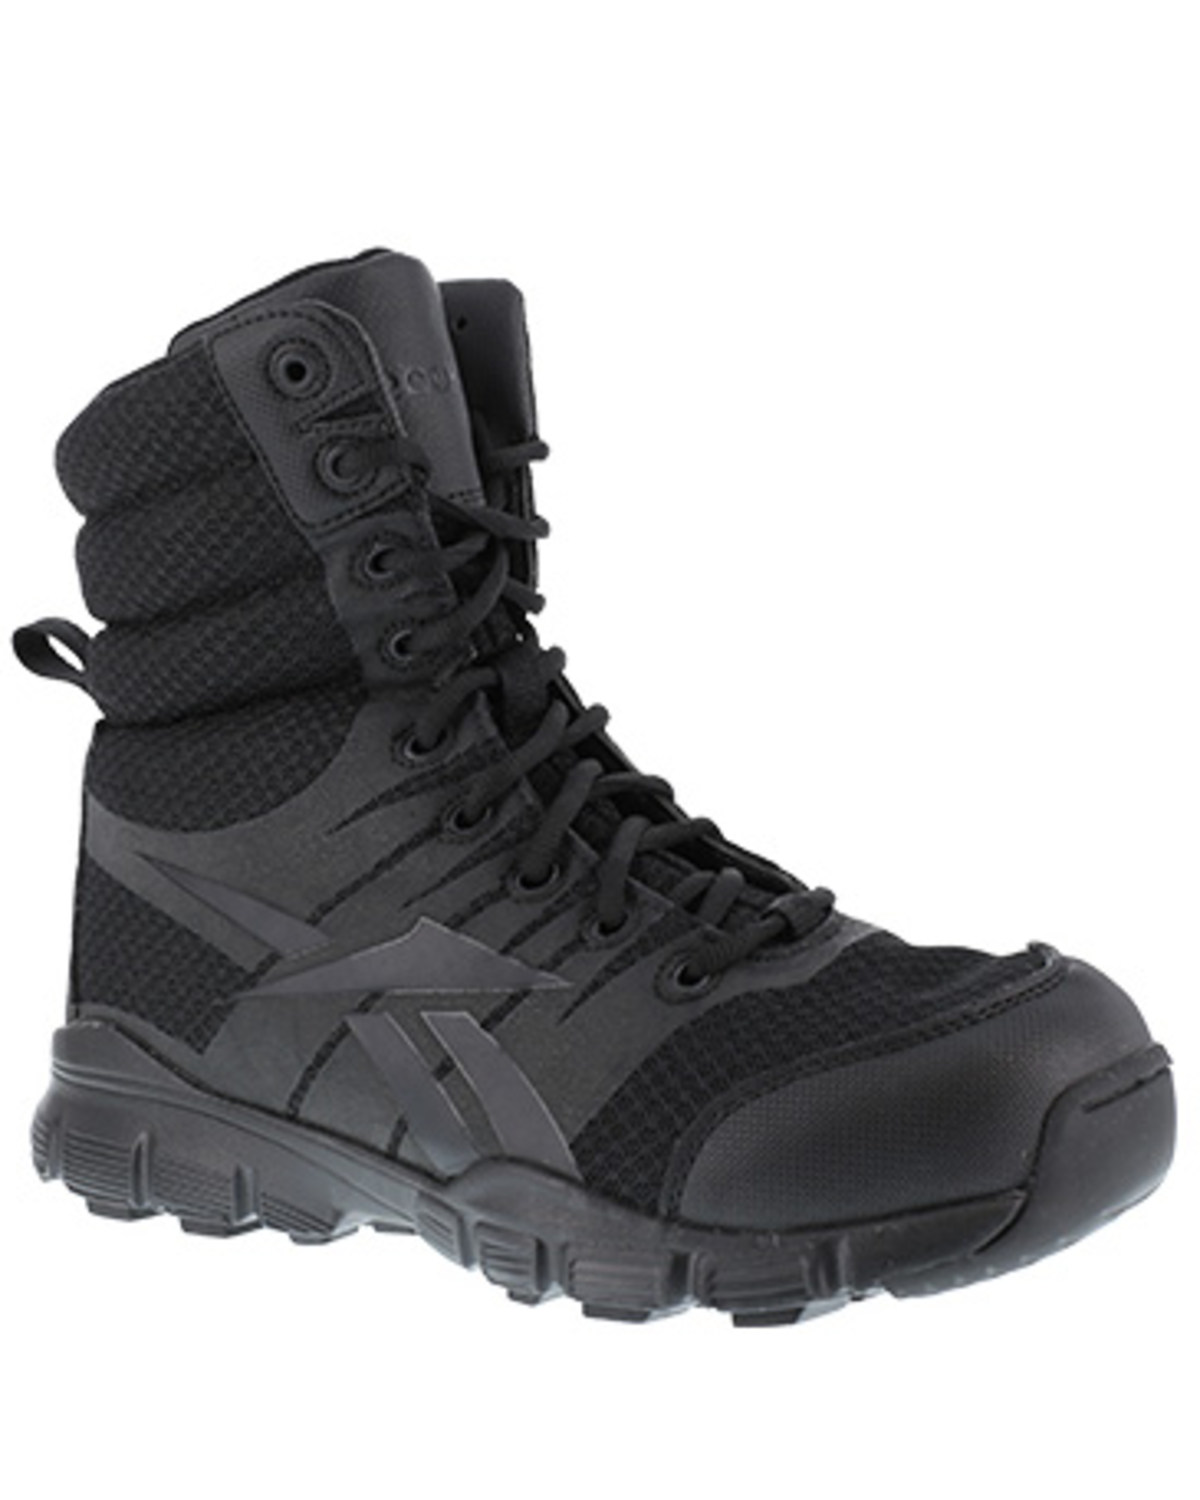 Reebok Men's Dauntless 8" Tactical Boots - Round Toe